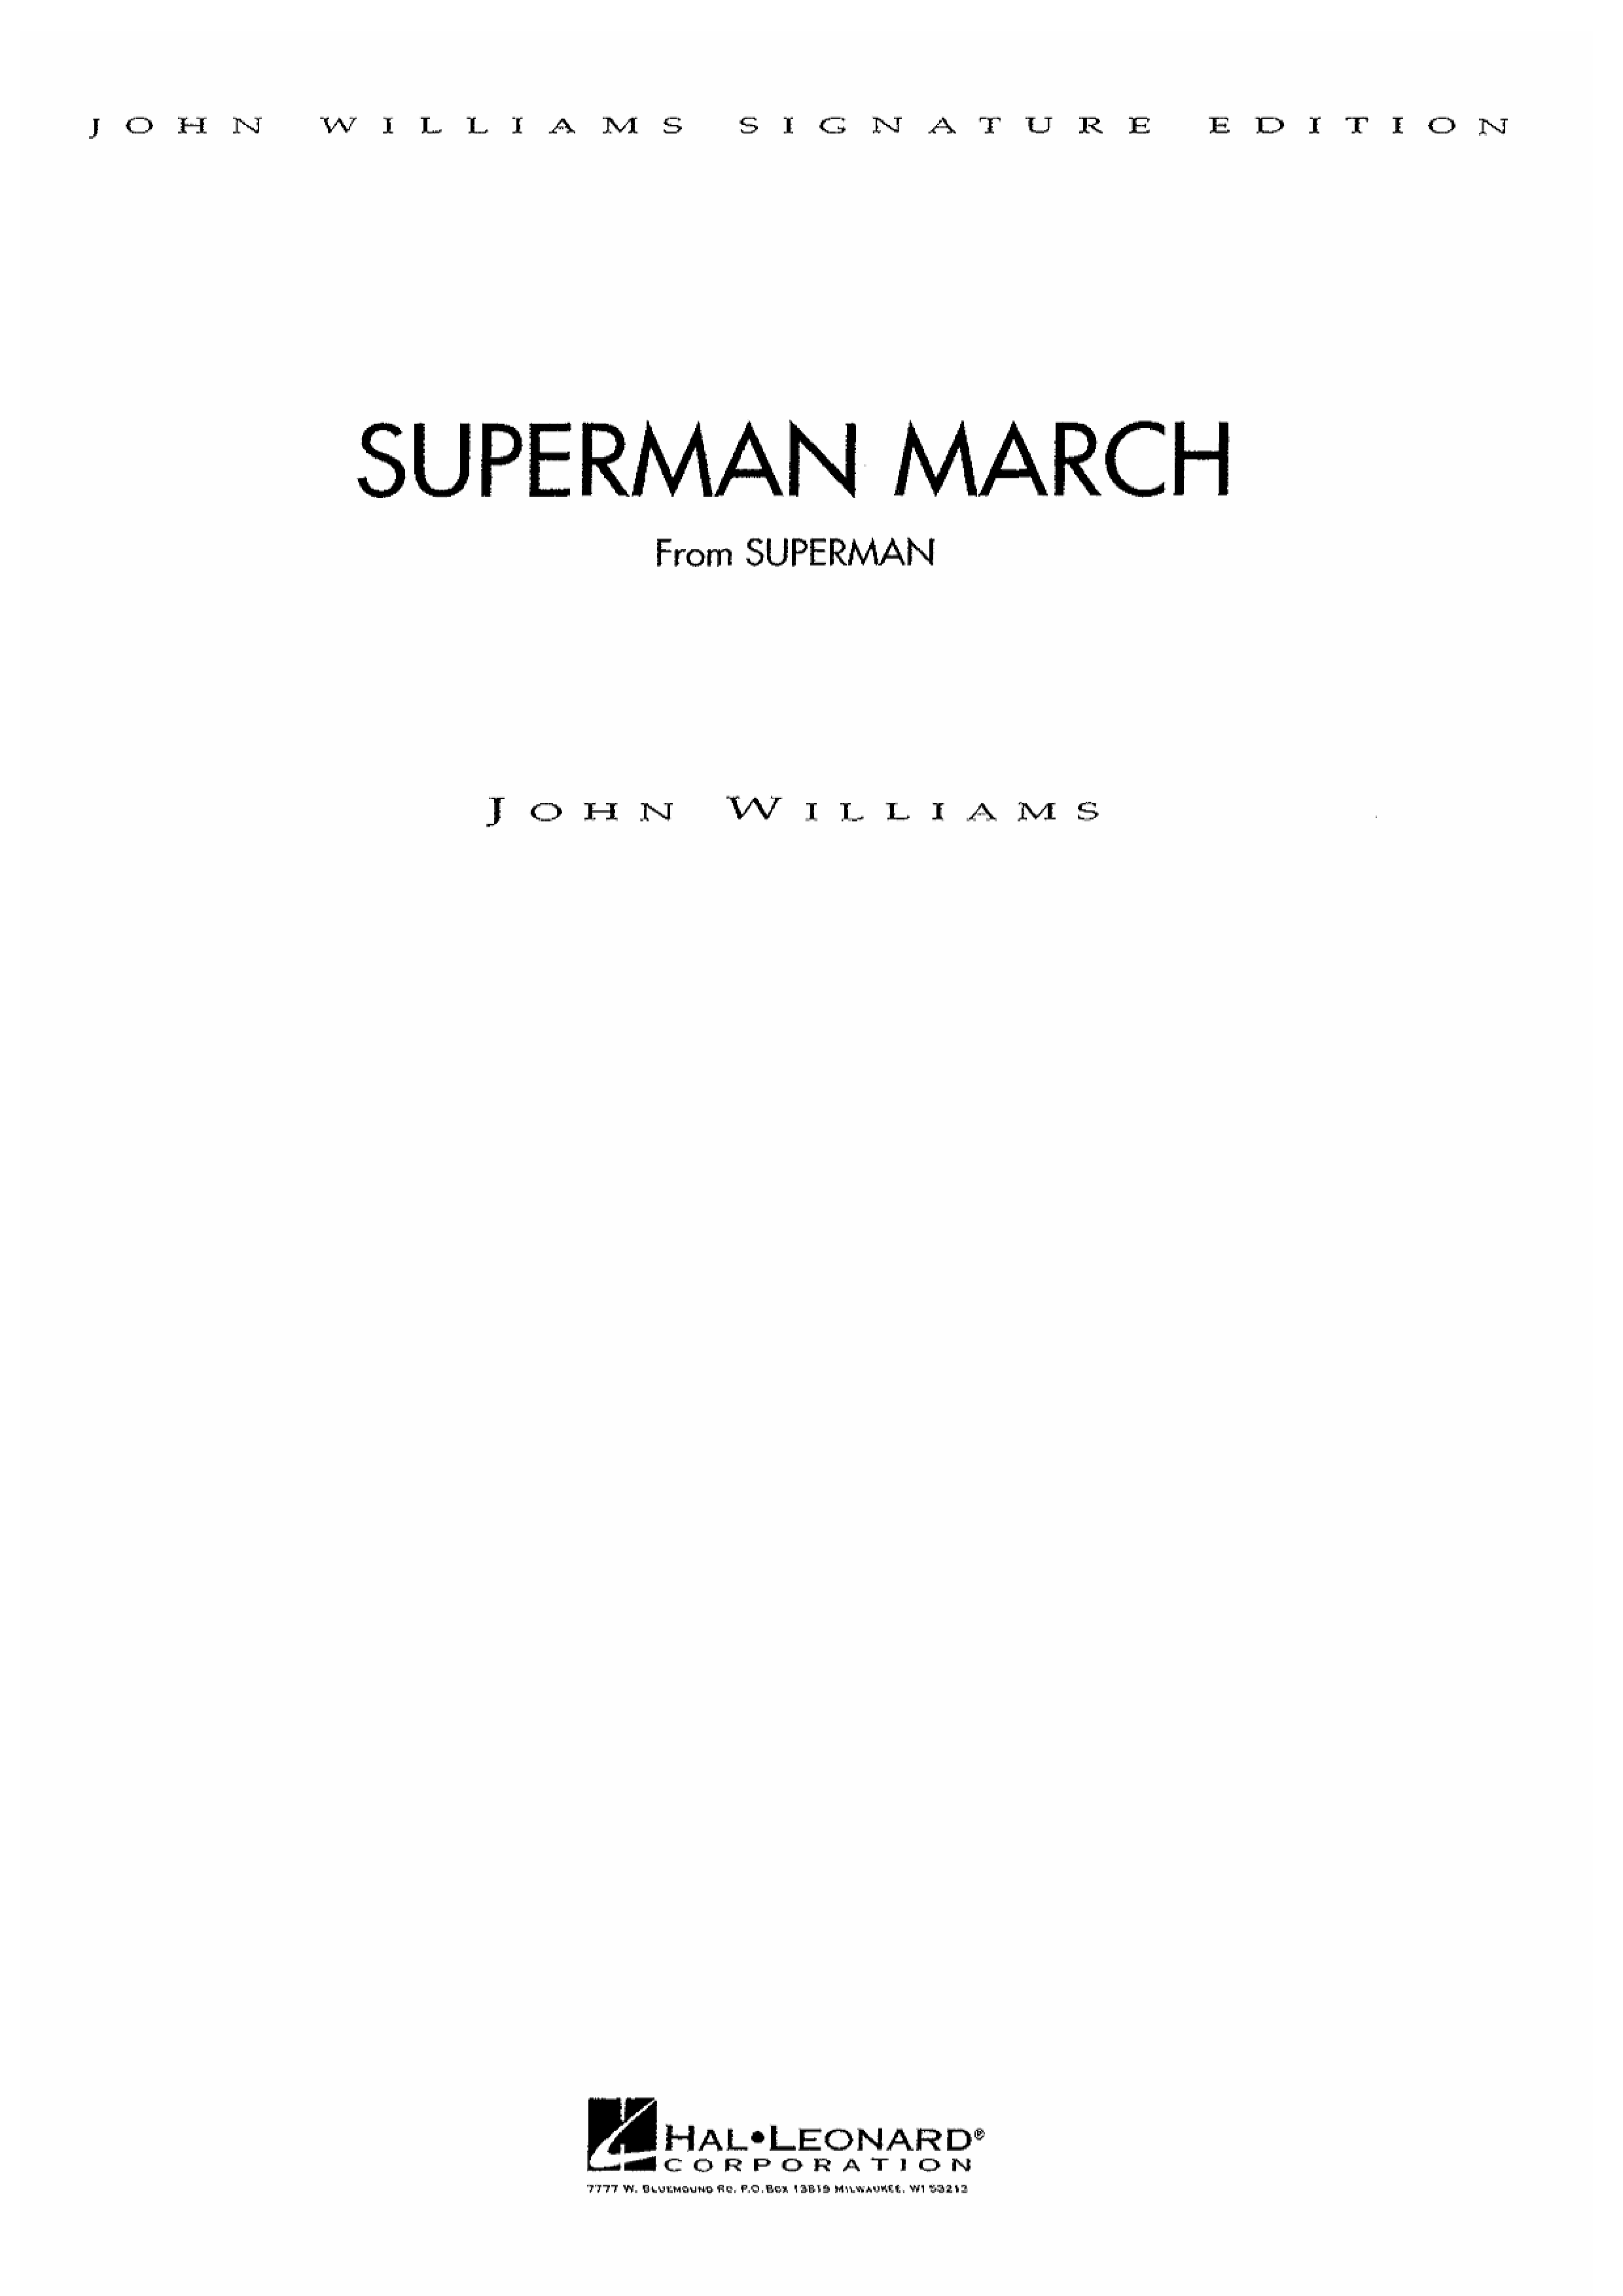 Superman March Score